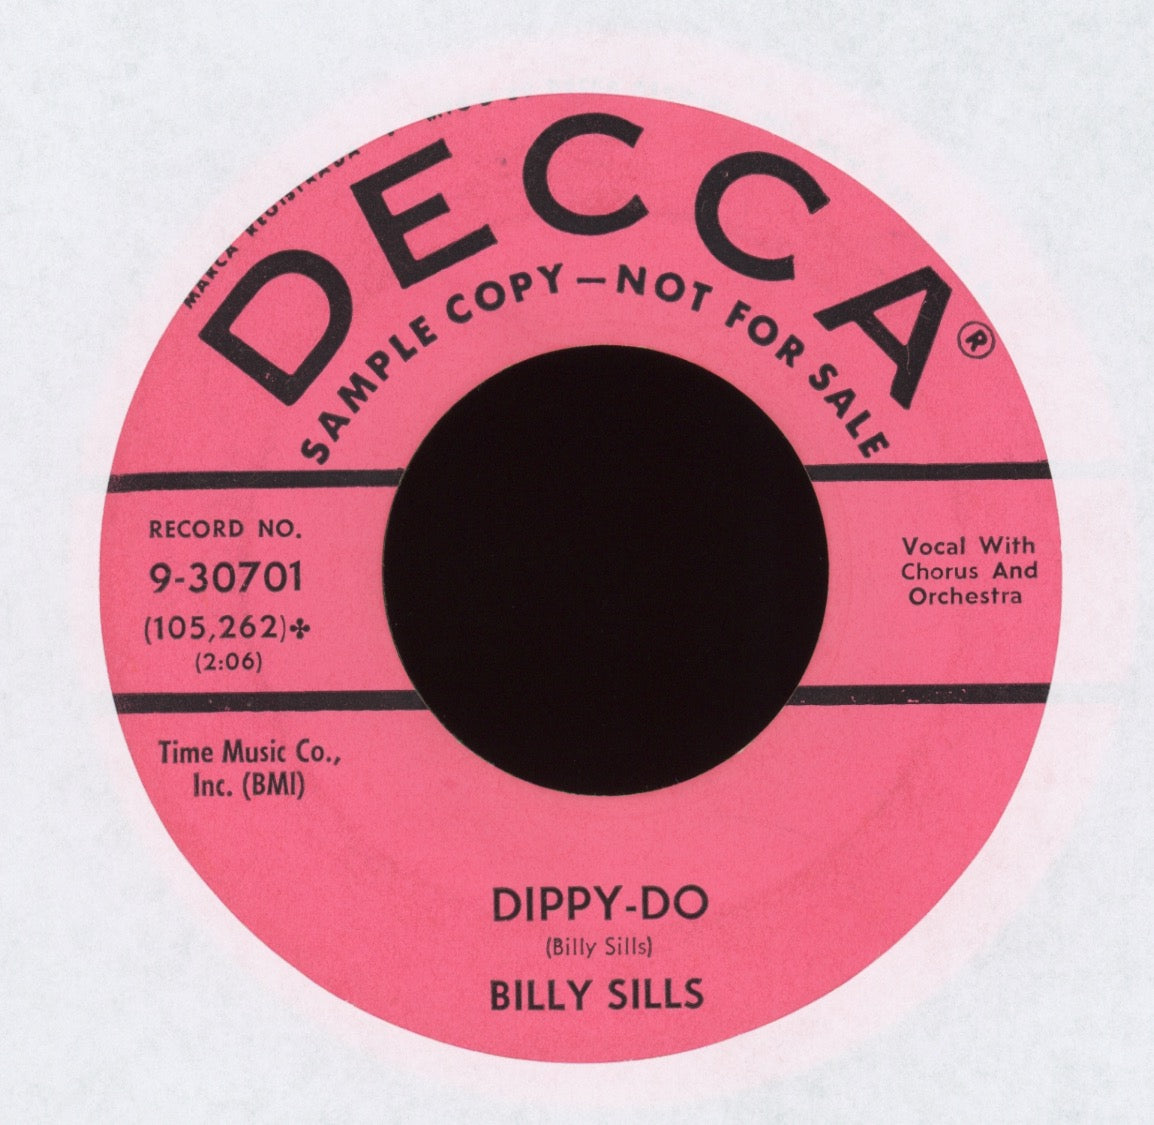 Billy Sills - Nightmare on Decca Promo